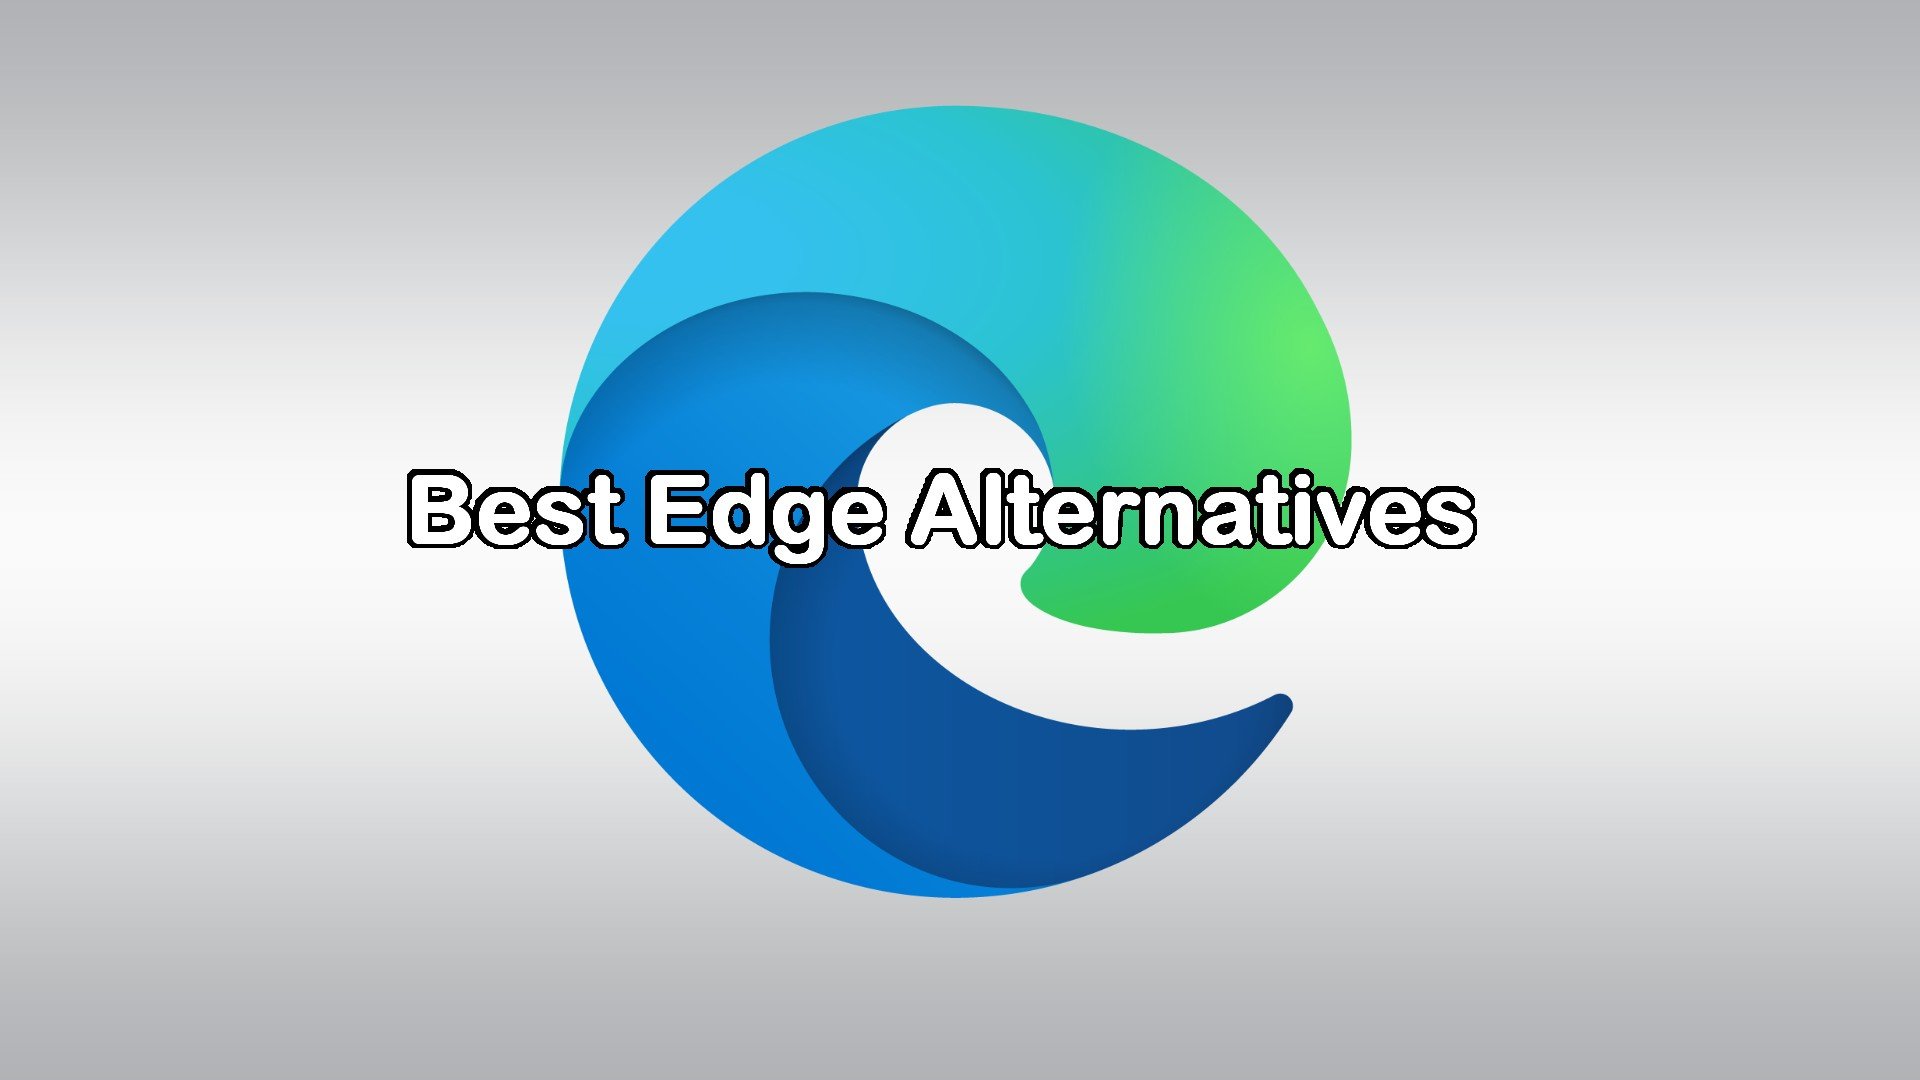 Microsoft Edge Alternative